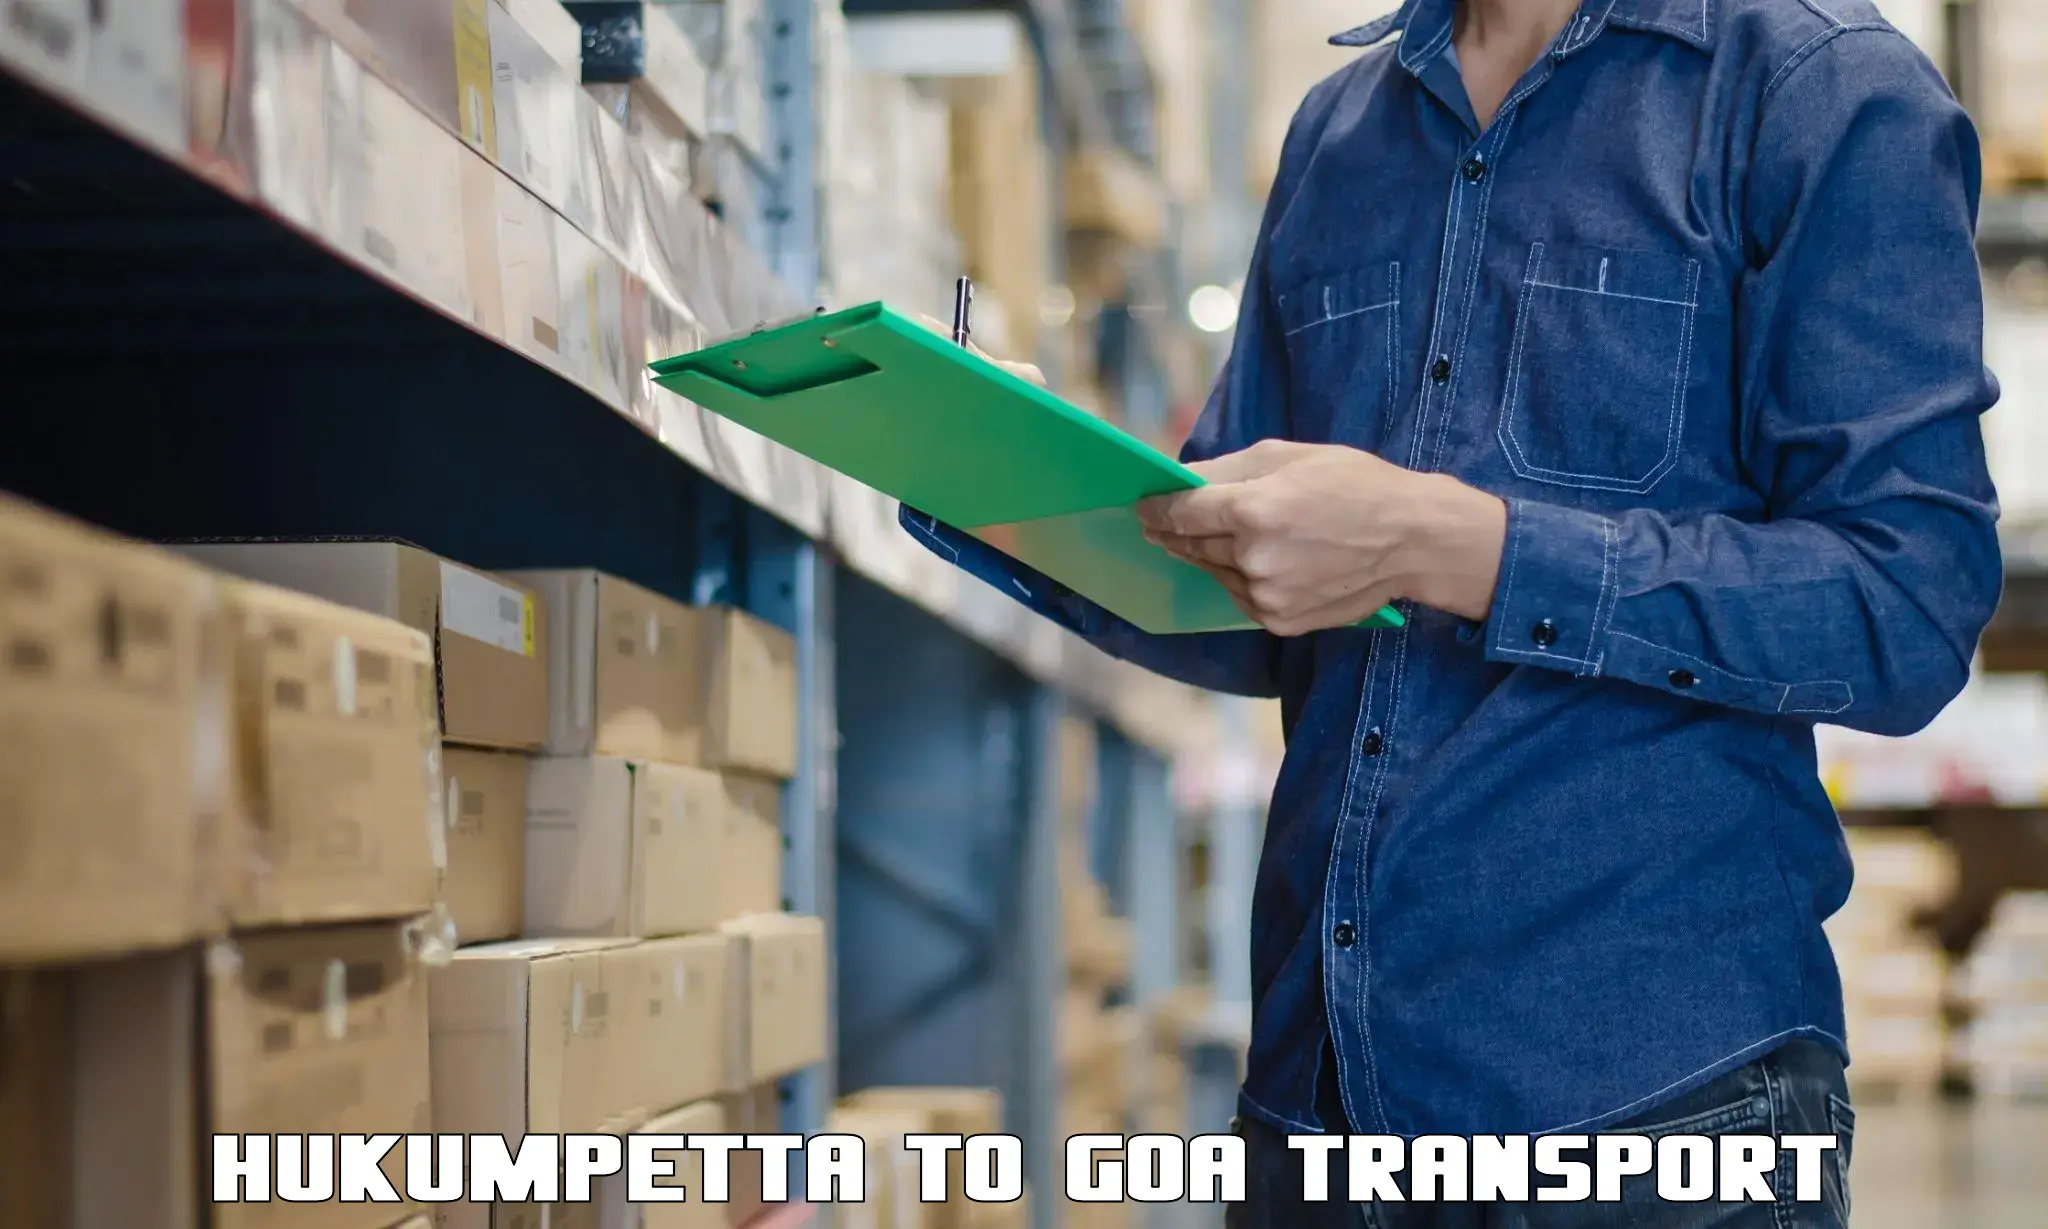 Container transport service Hukumpetta to Goa